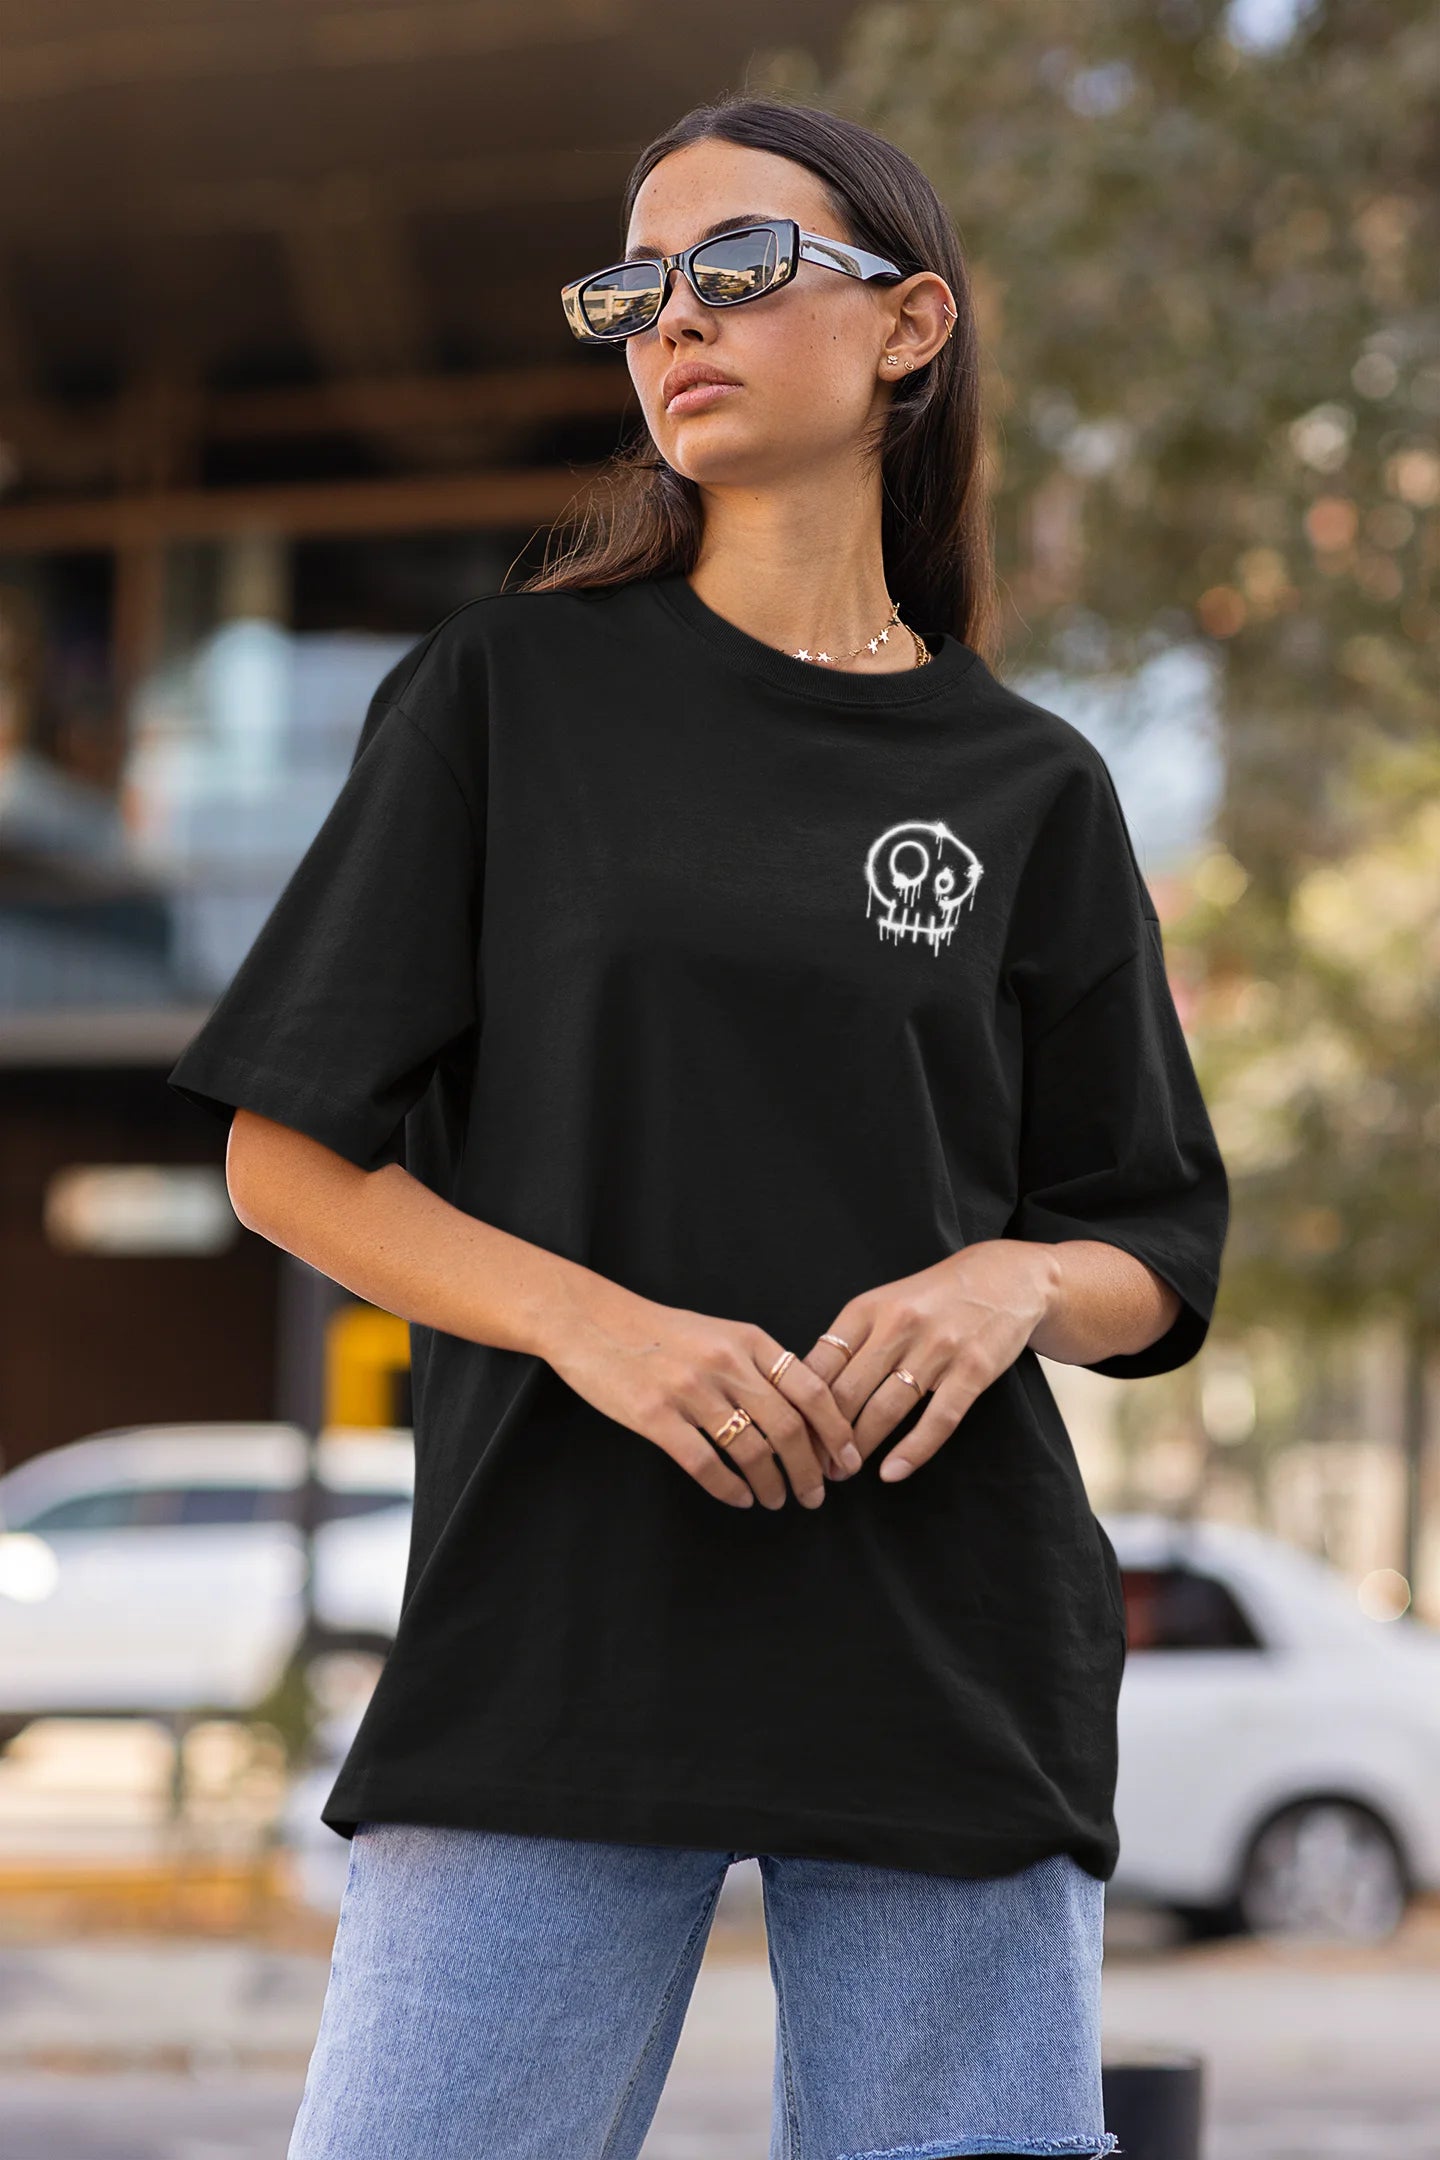 Nirvana | Premium Oversized Half Sleeve Unisex T-Shirt